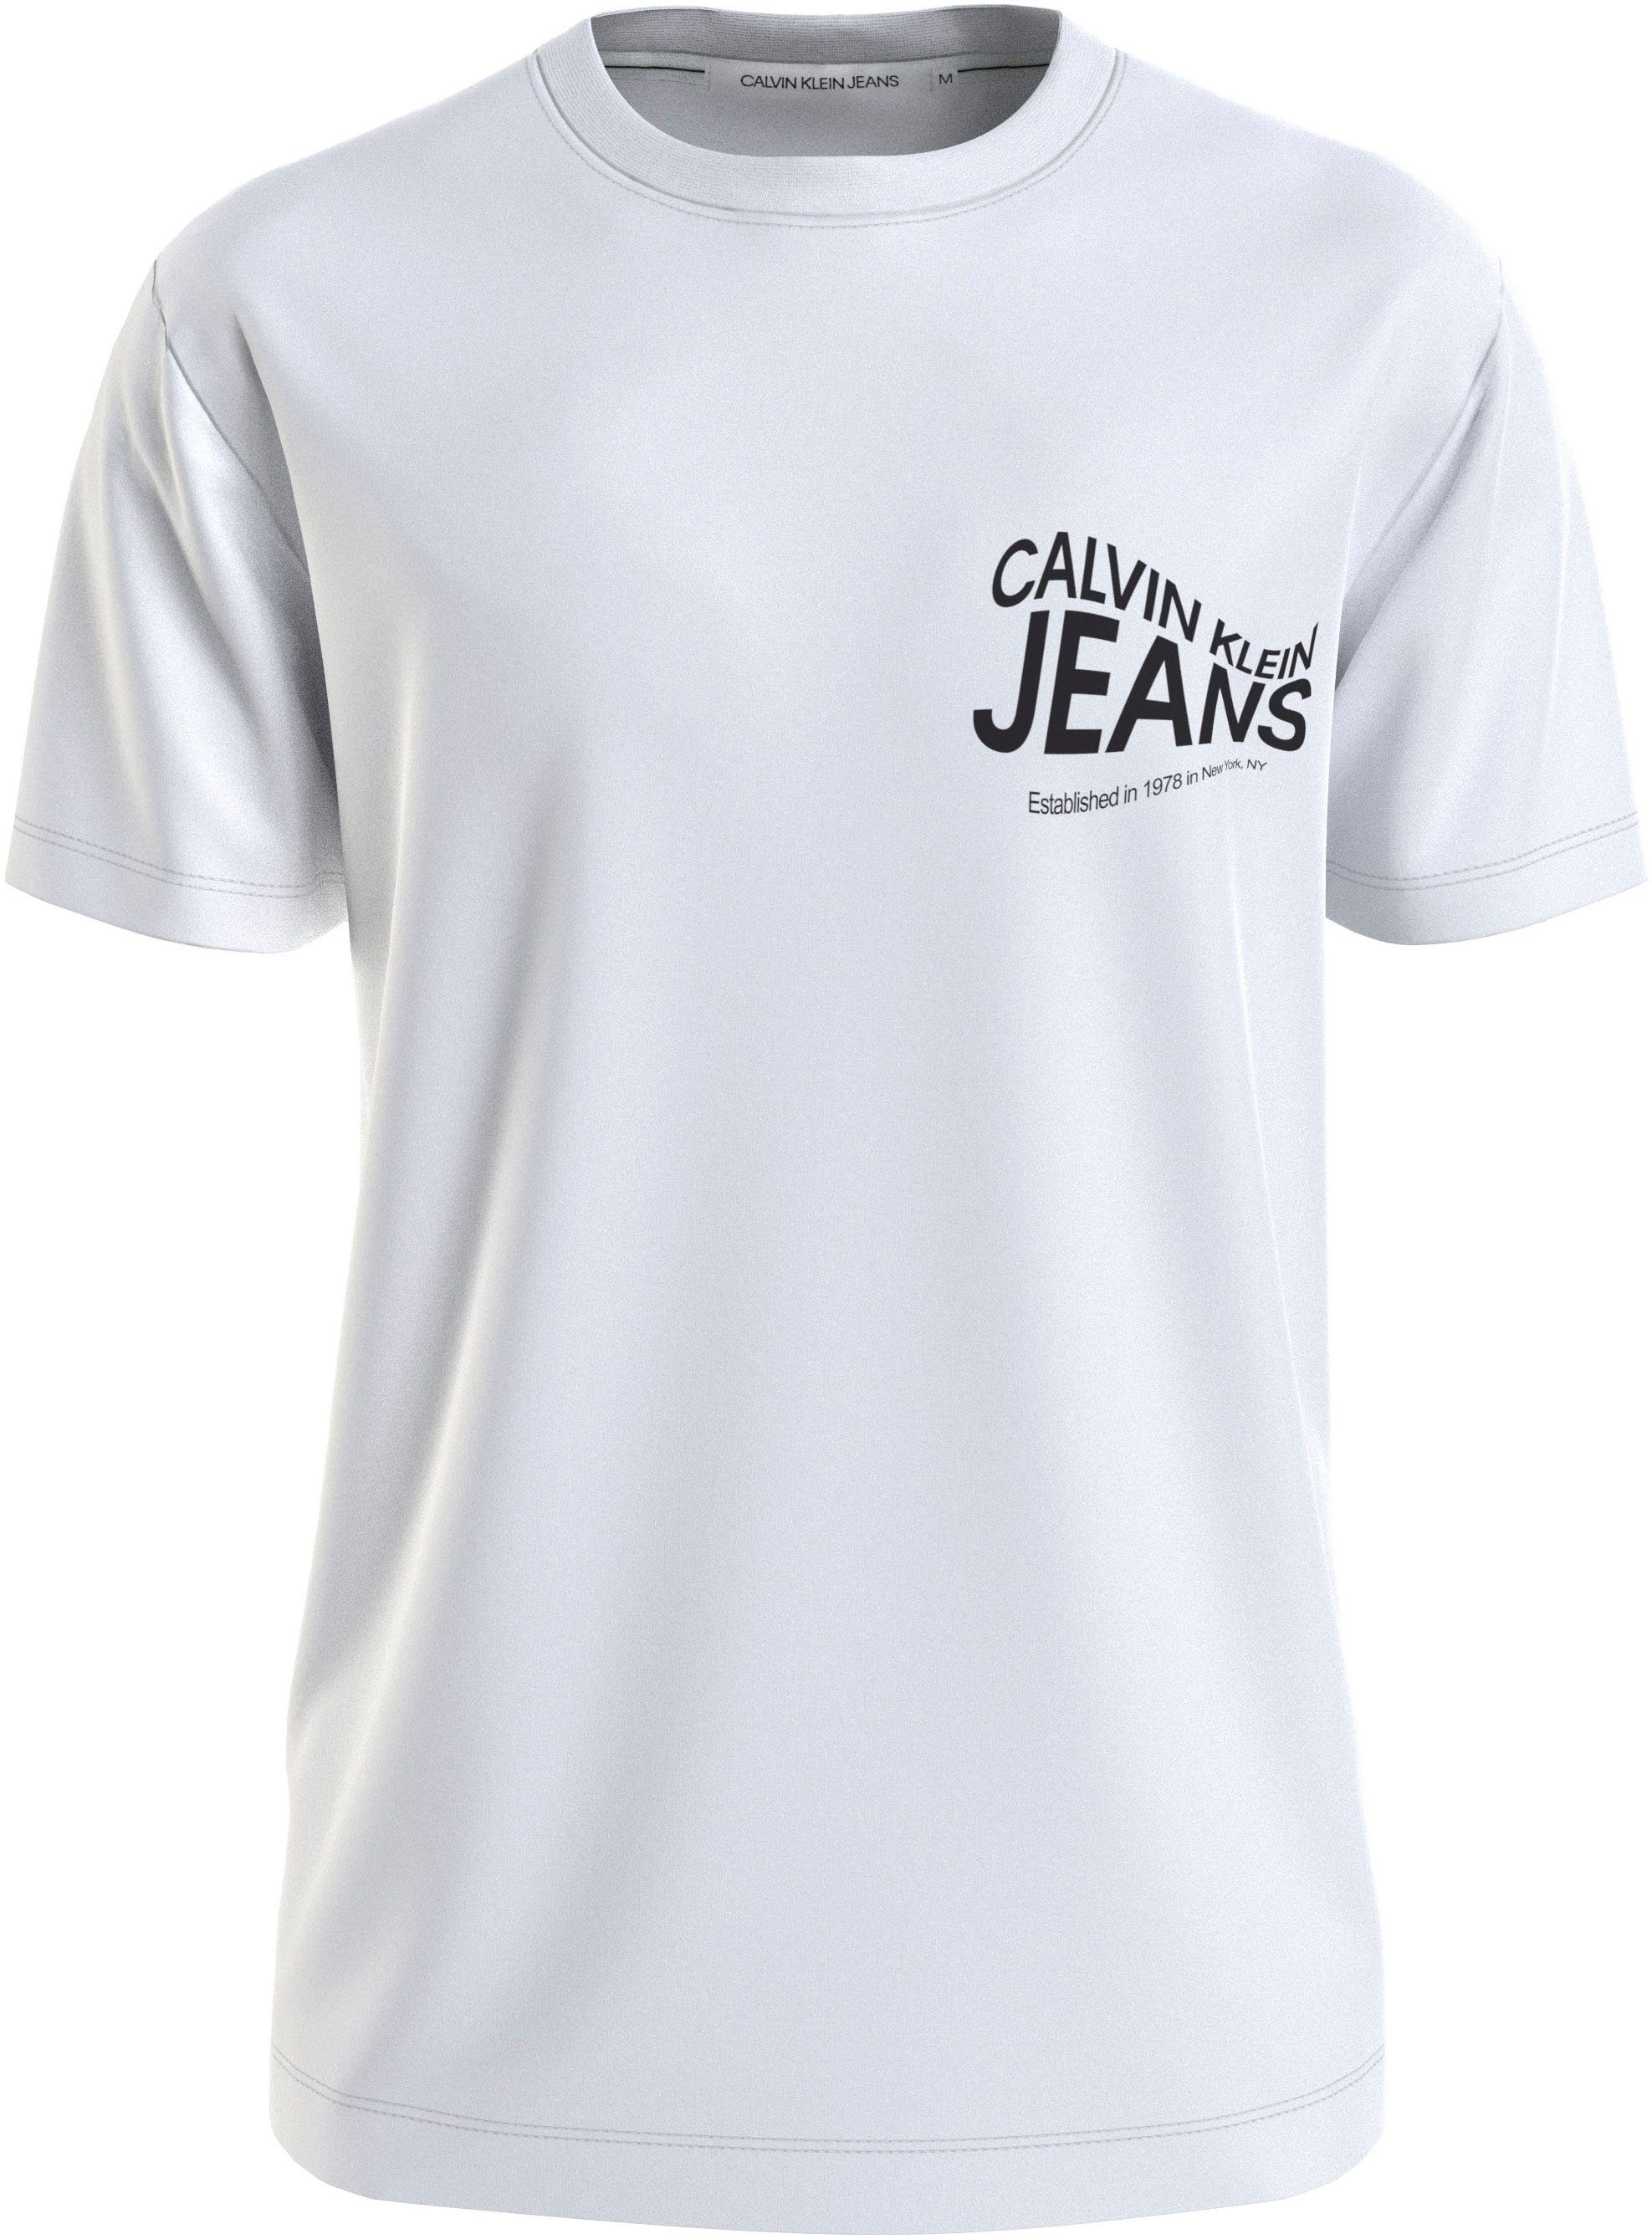 FUTURE MOTION TEE Klein White Calvin Jeans T-Shirt Bright GRAPHIC